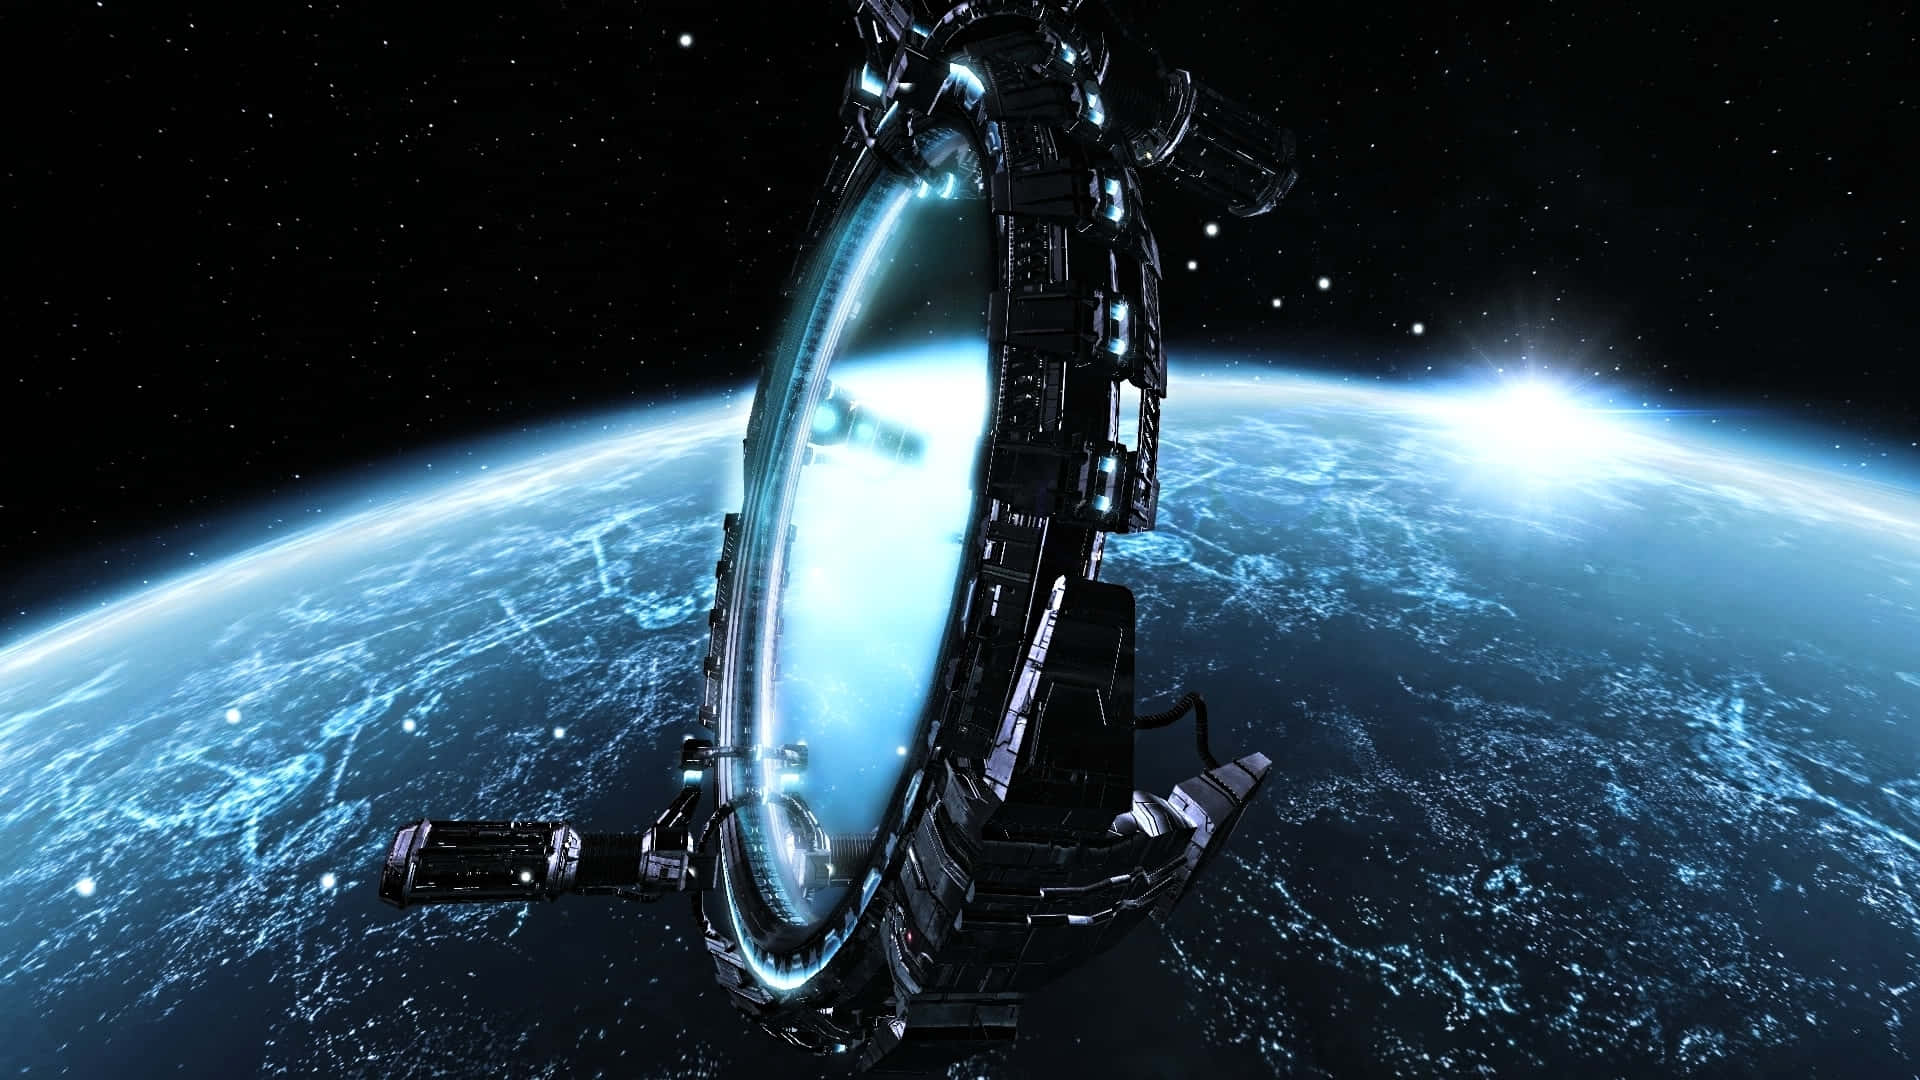 Stargateen El Espacio Fondo de pantalla